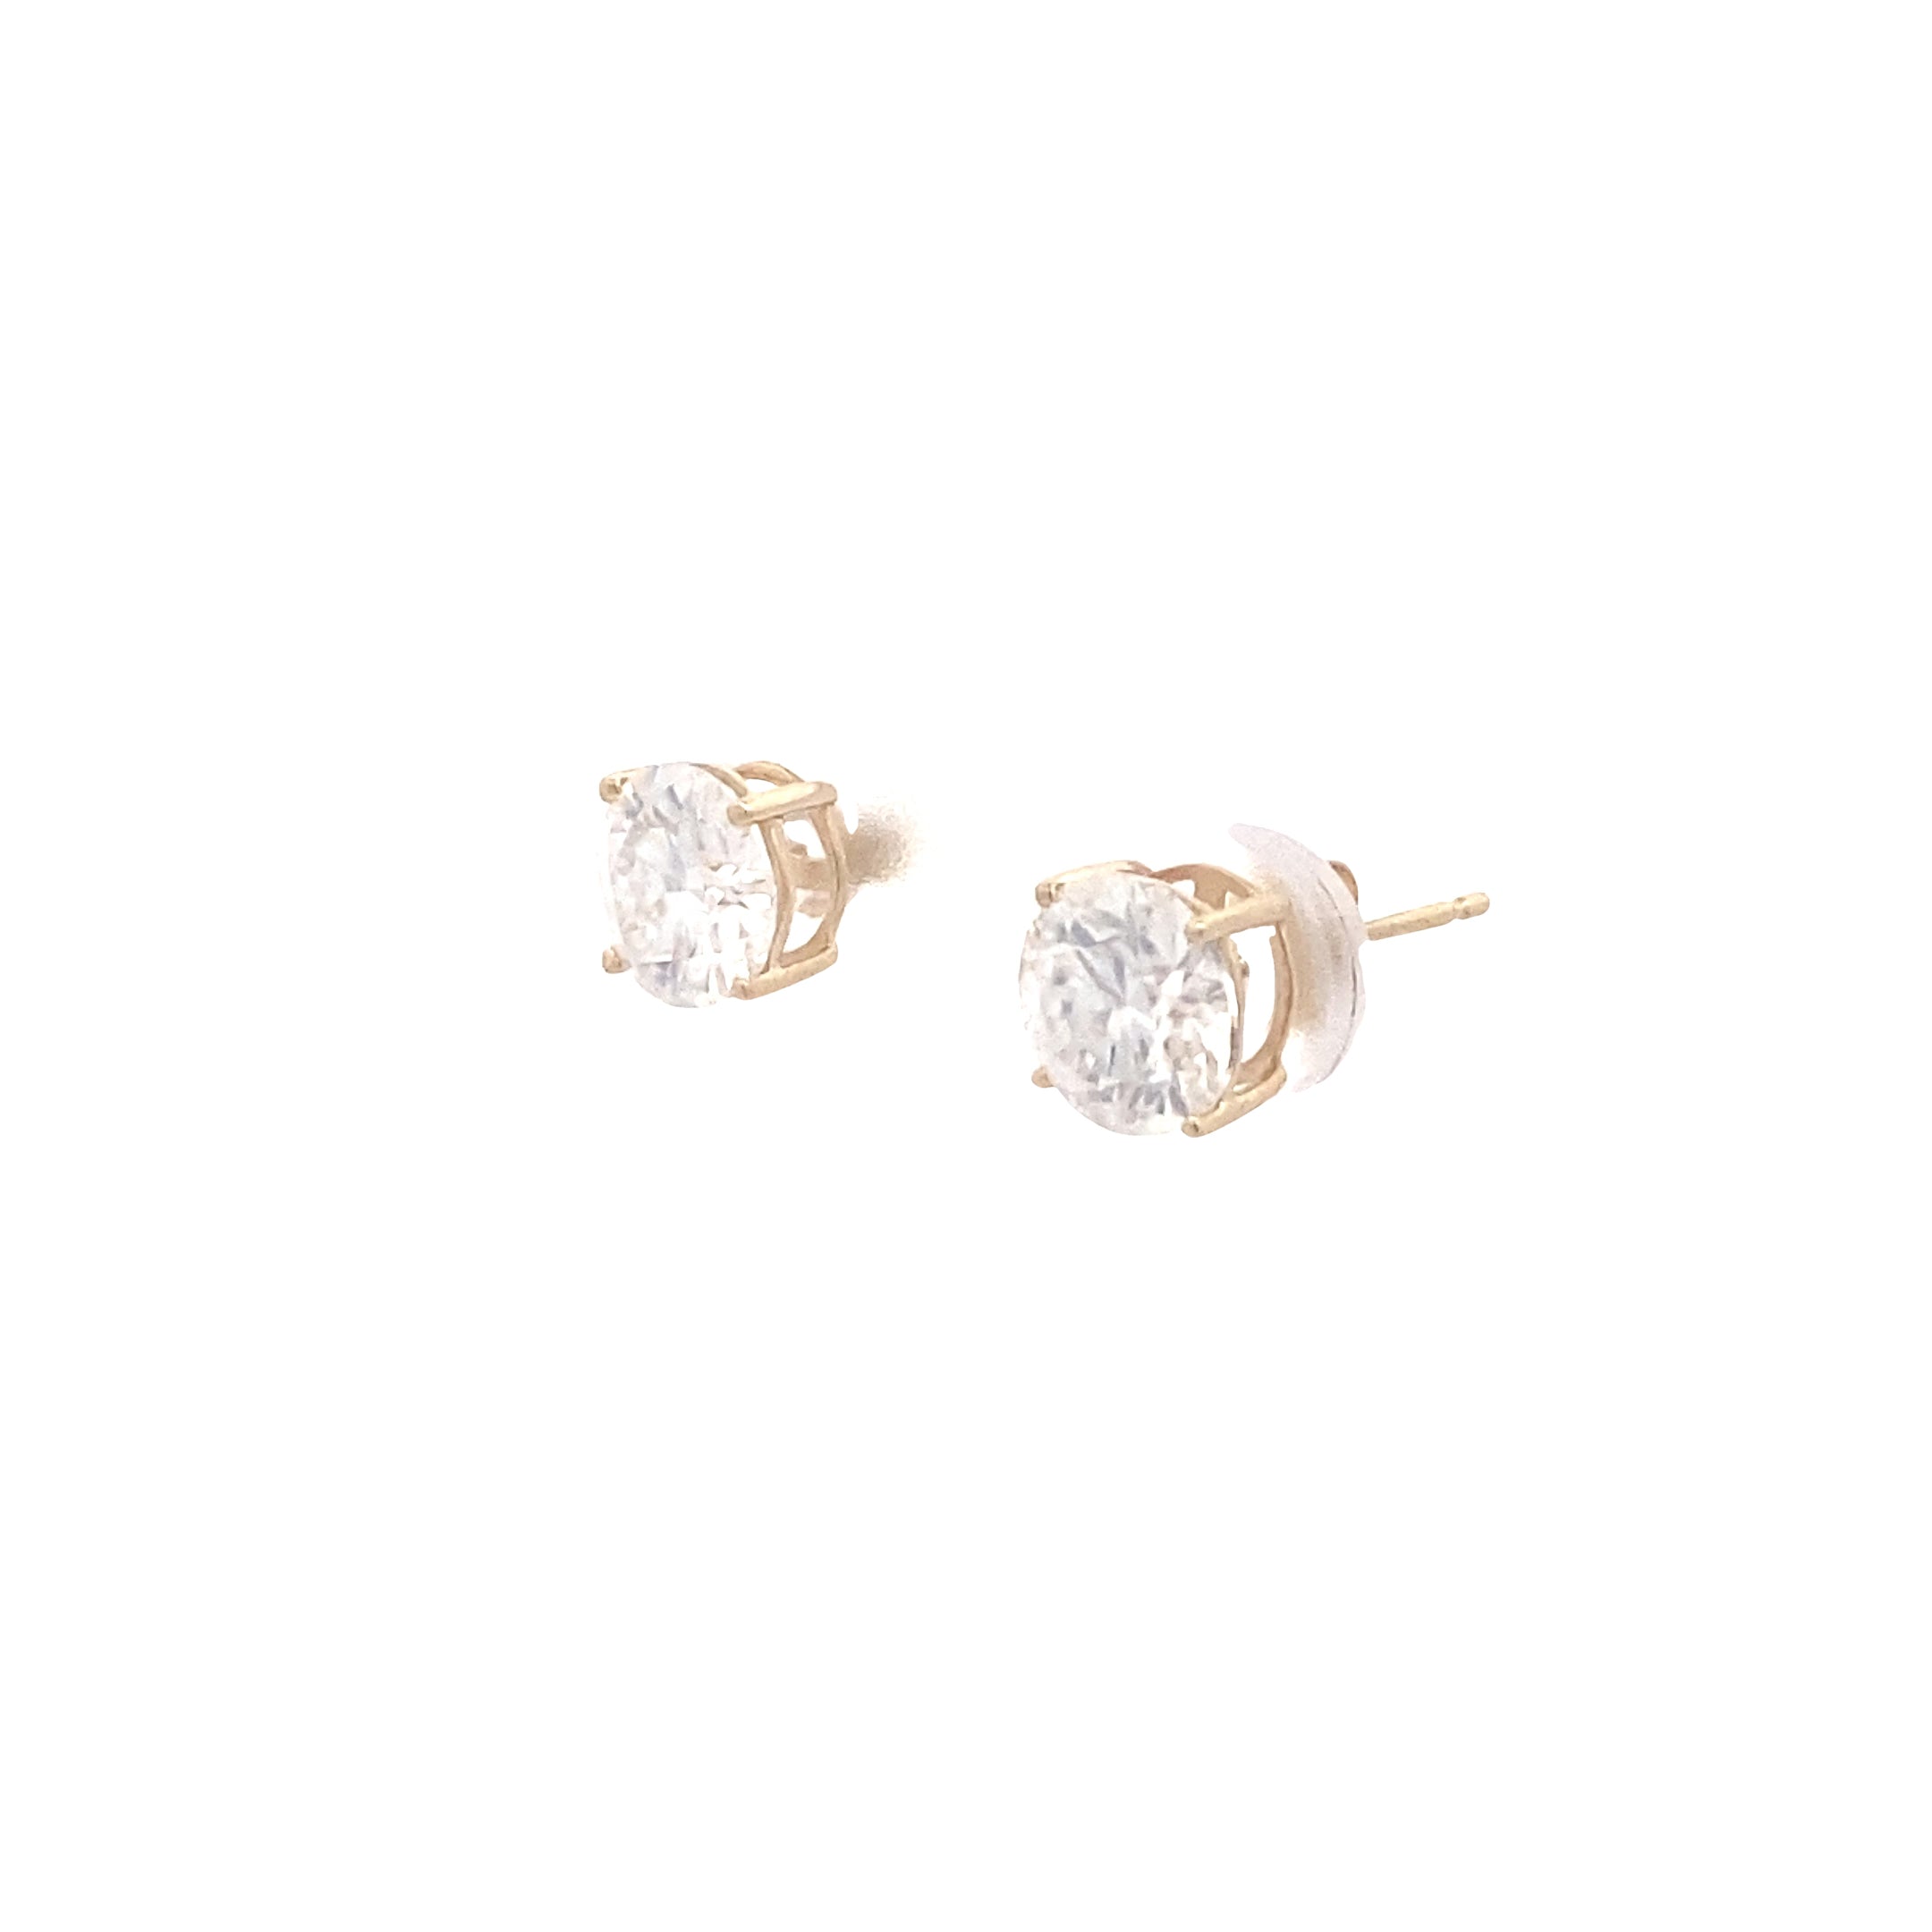 14K Yellow Gold 3CT. Basket-Set Moissanite Stud Earrings